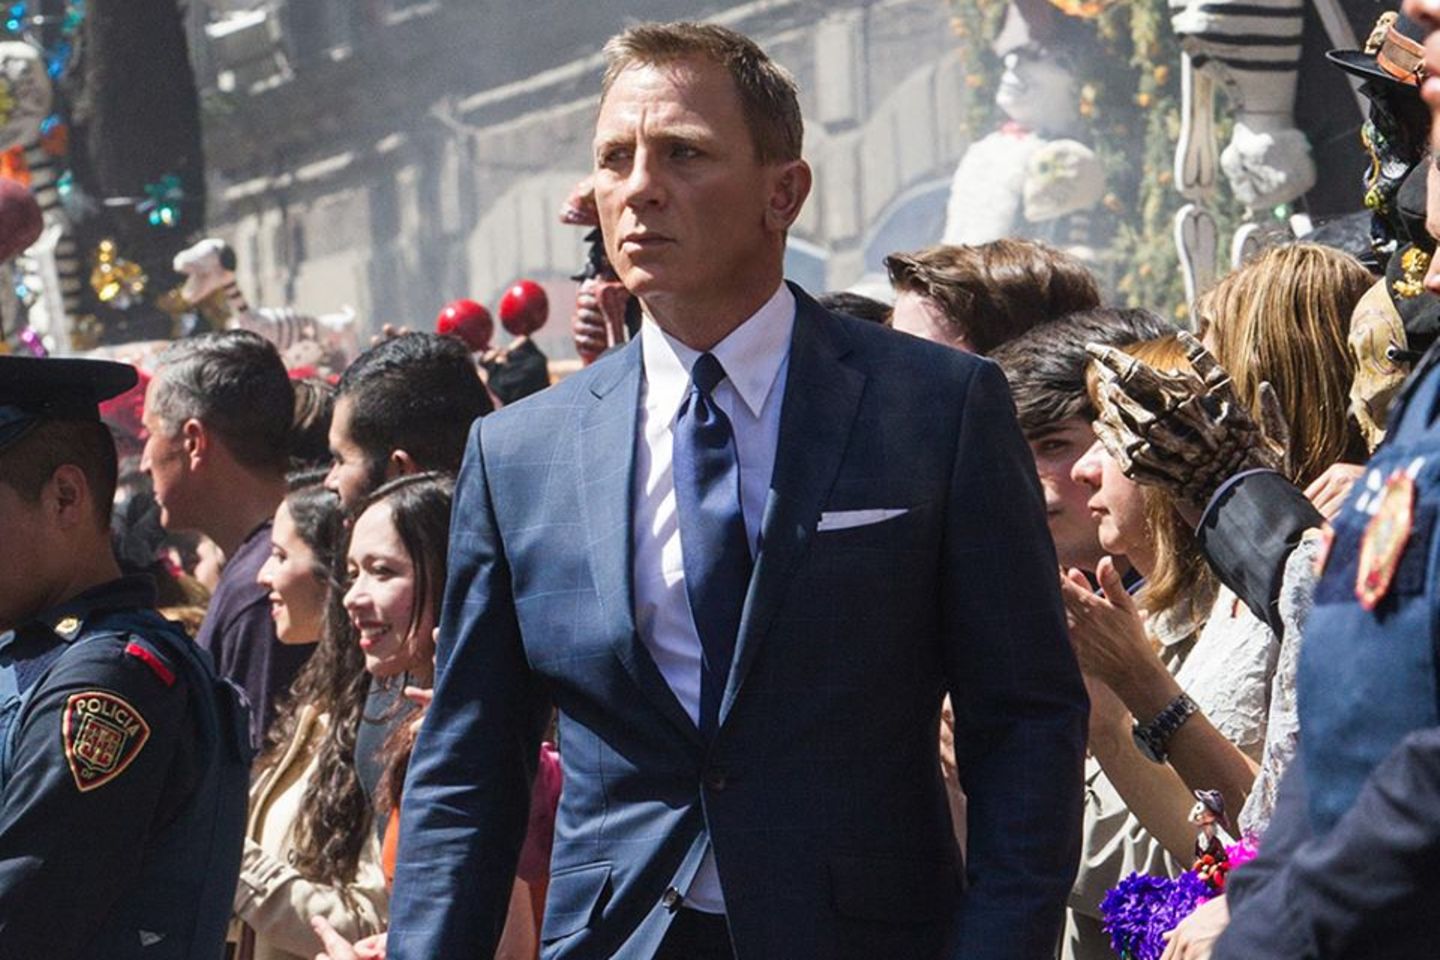 Daniel Craig, James Bond "Spectre"